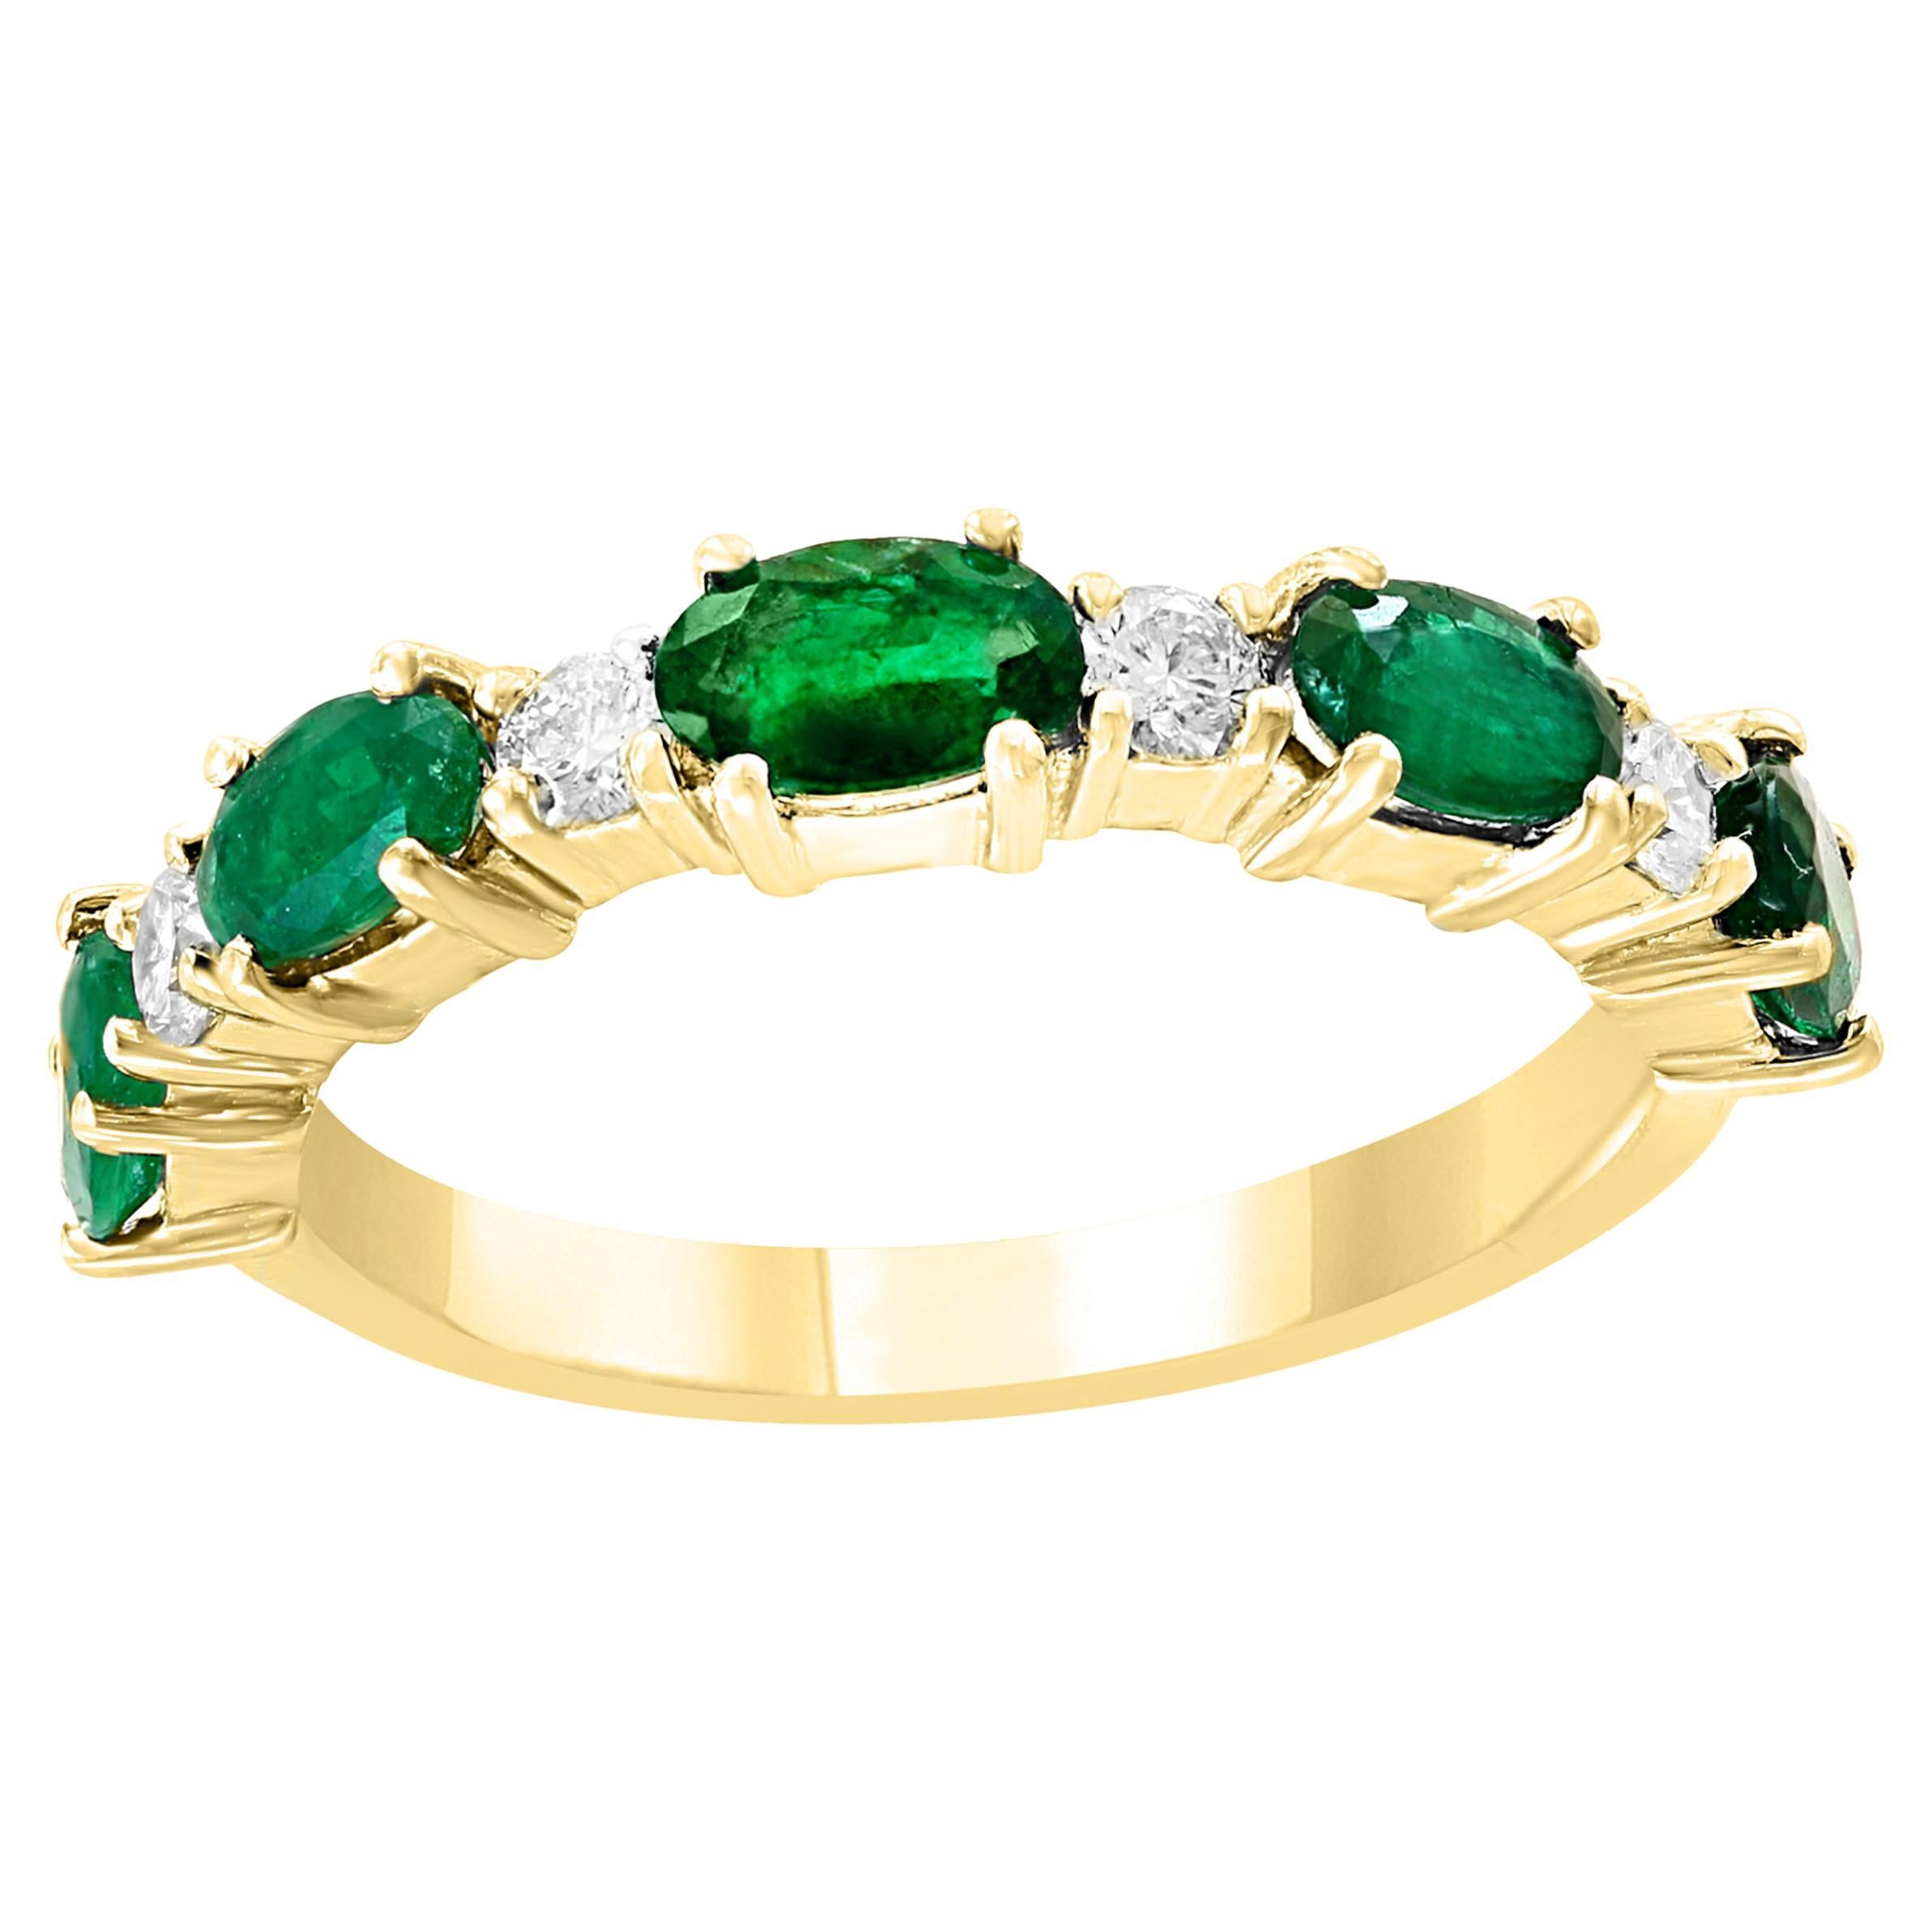 0.94 Carat Oval Cut Alternating Emerald Diamond Wedding Band in 14k Yellow Gold